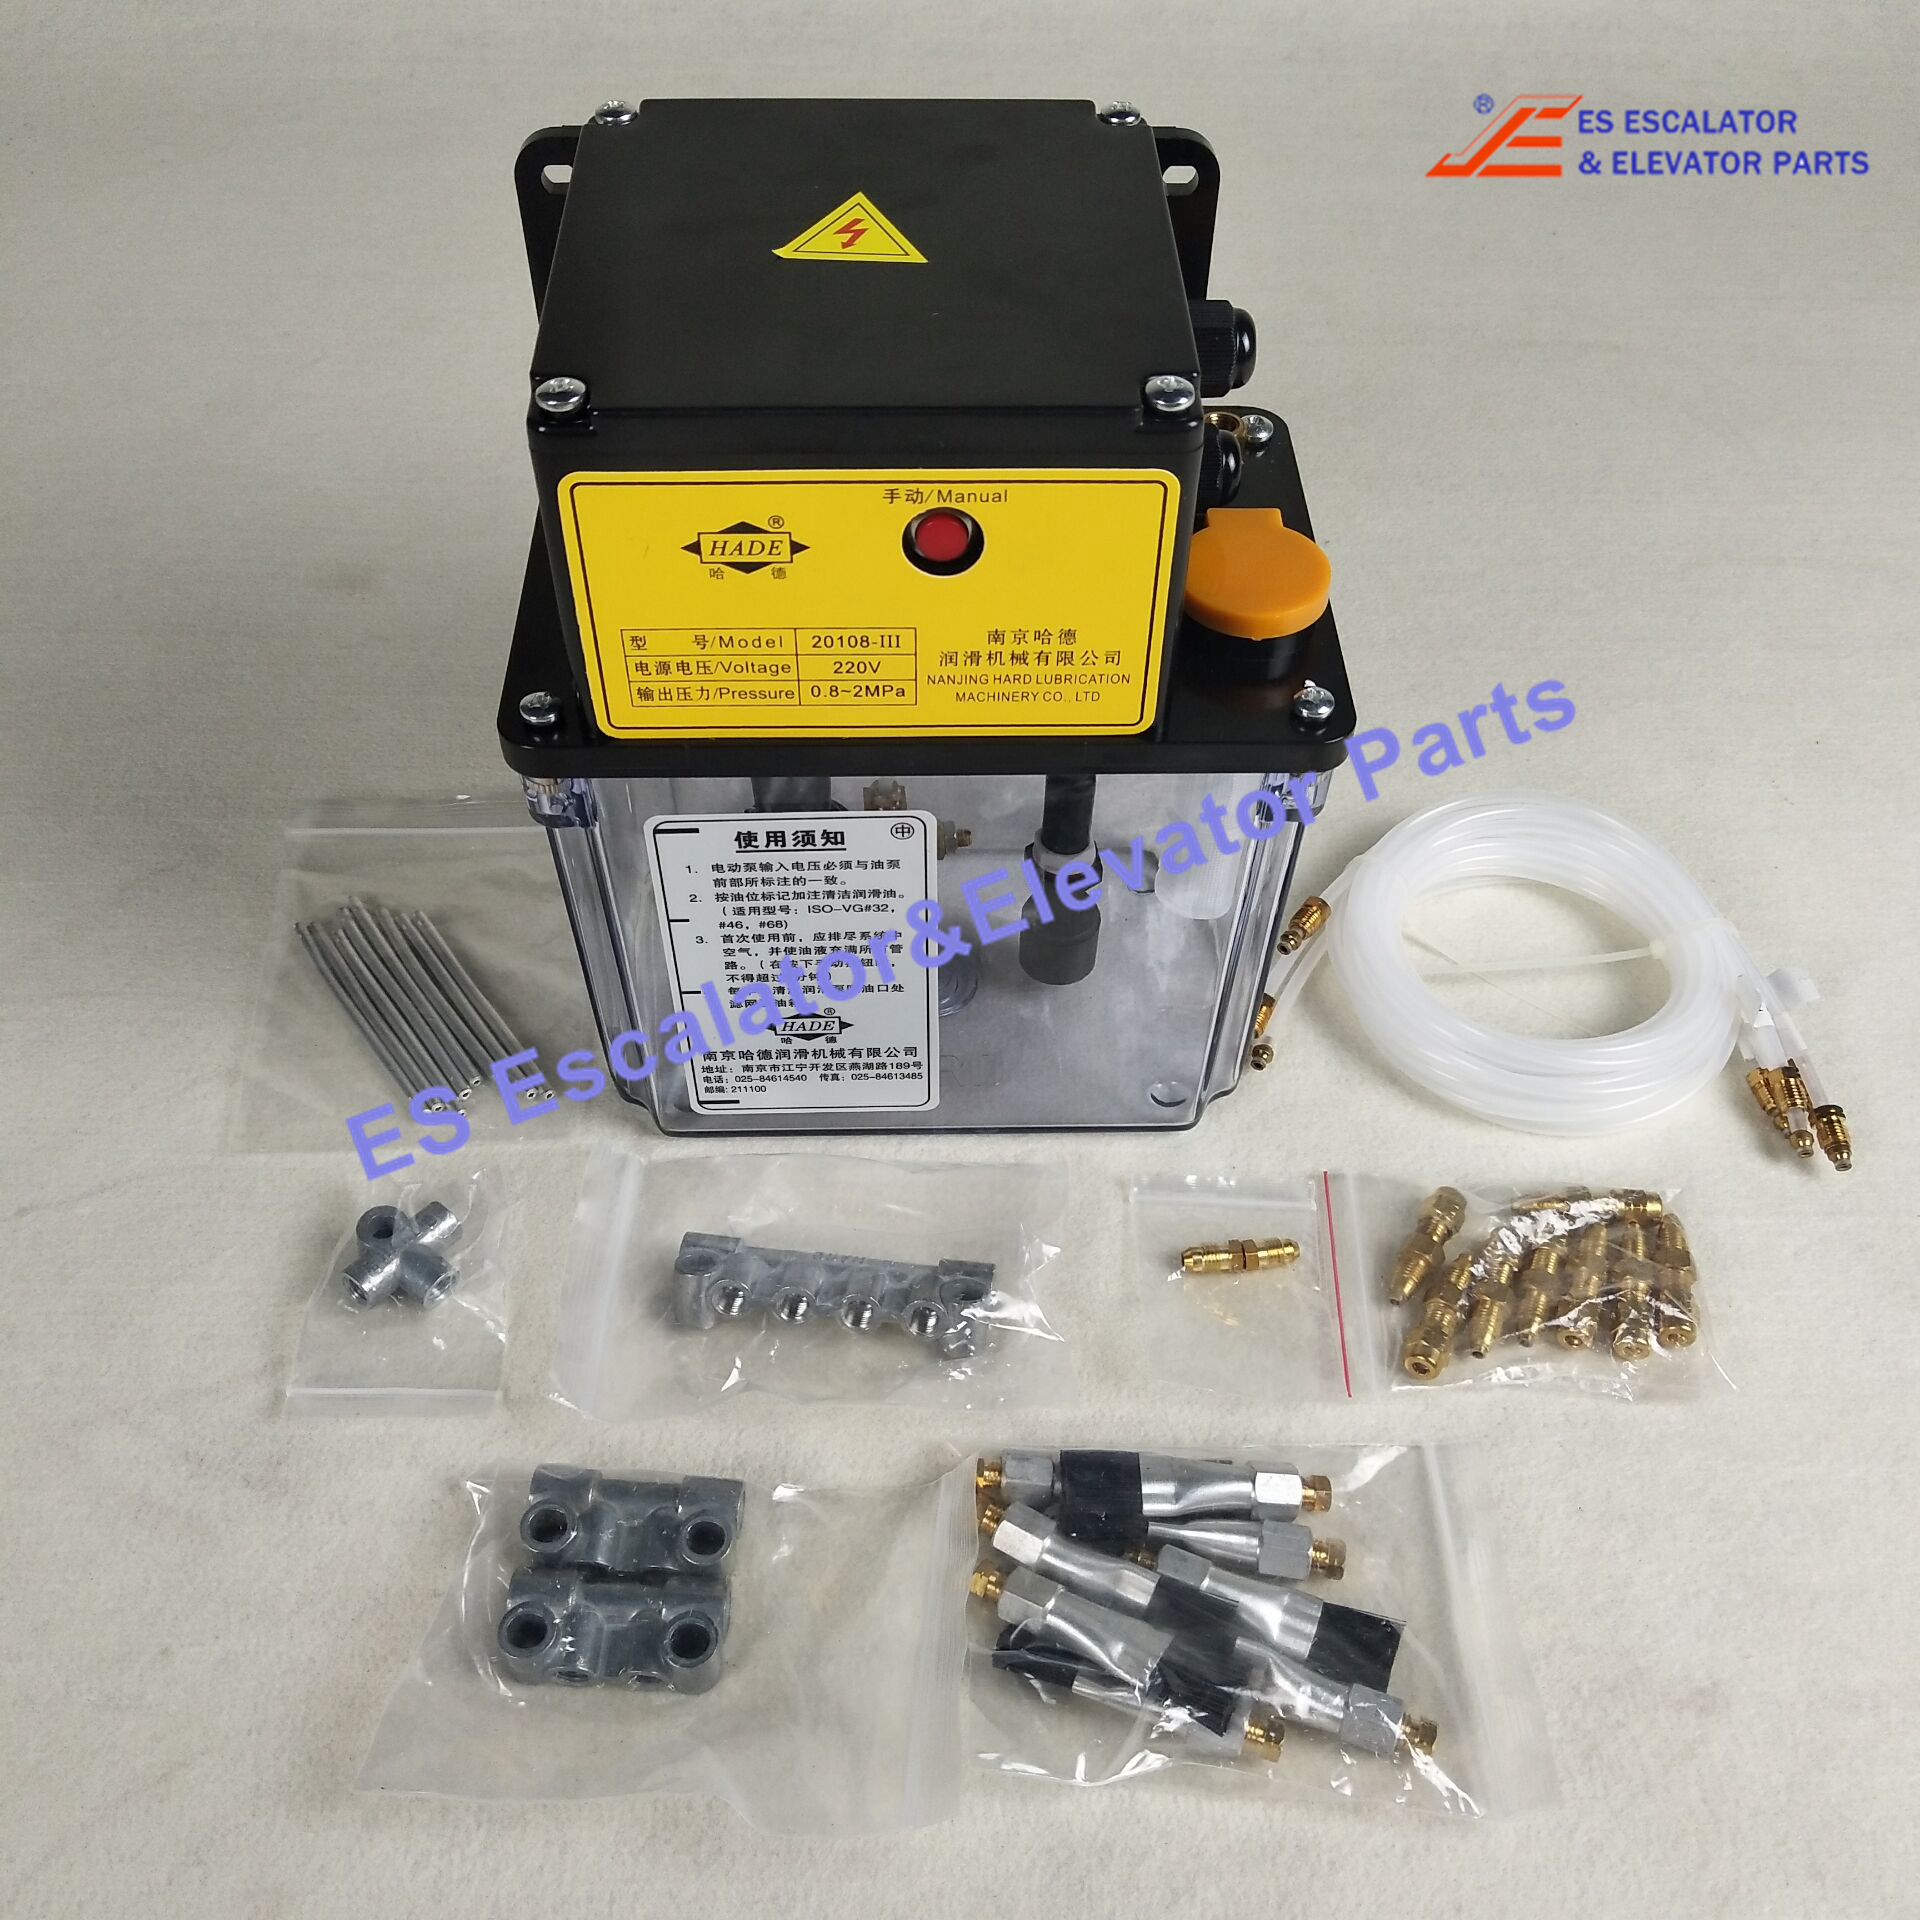 AnlevOilPump Escalator Oil Pump Motor Driven Lubricator Use For Anlev